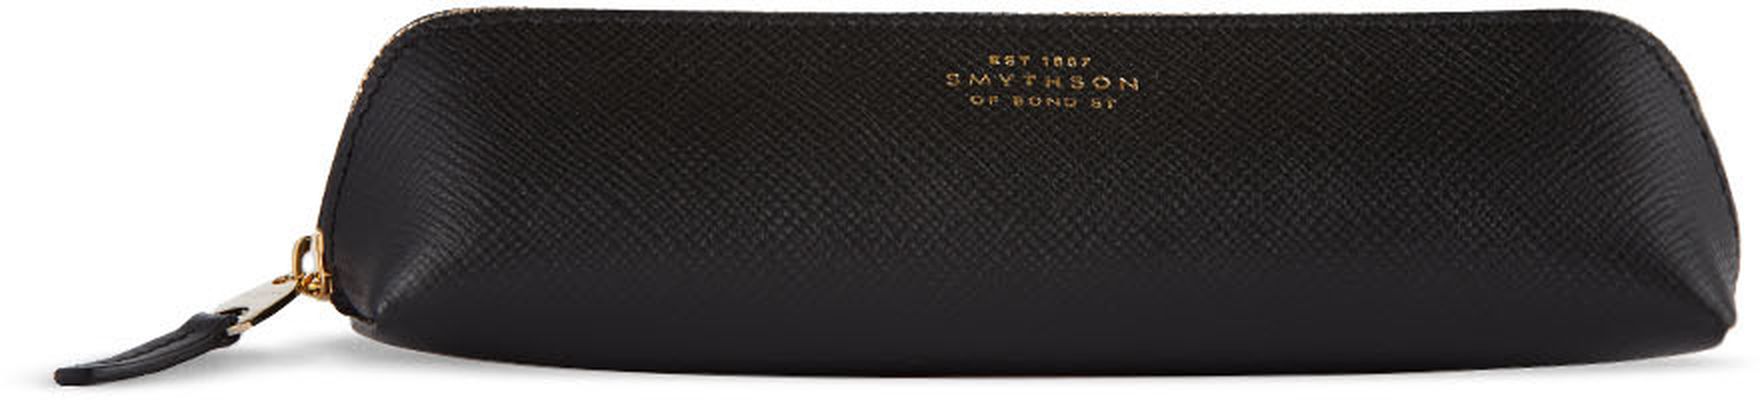 Smythson Black Panama Pencil Case